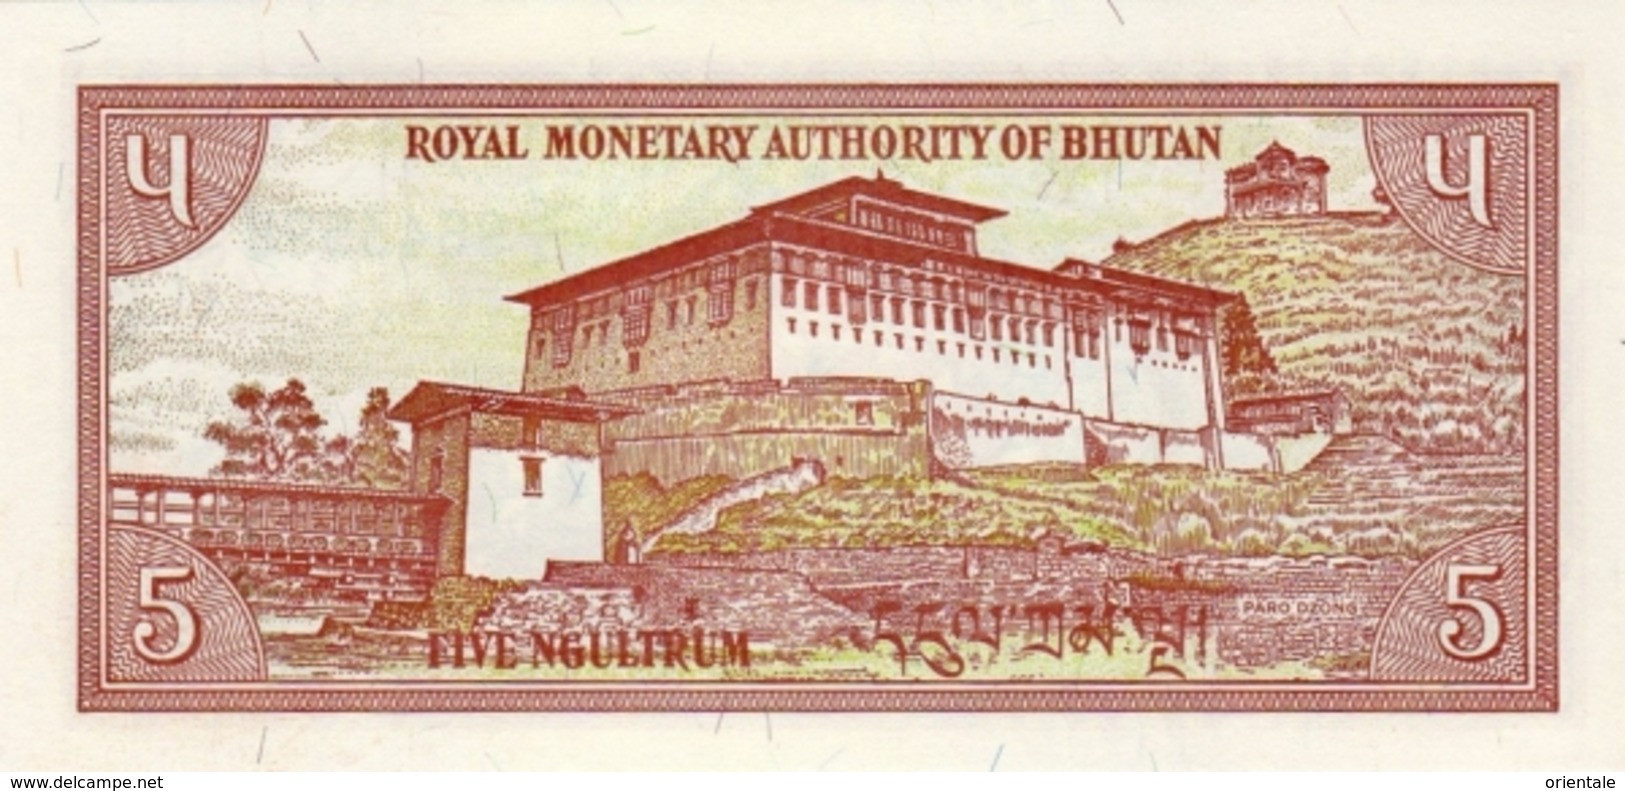 BHUTAN P. 14b 5 N 1985 UNC - Bhutan